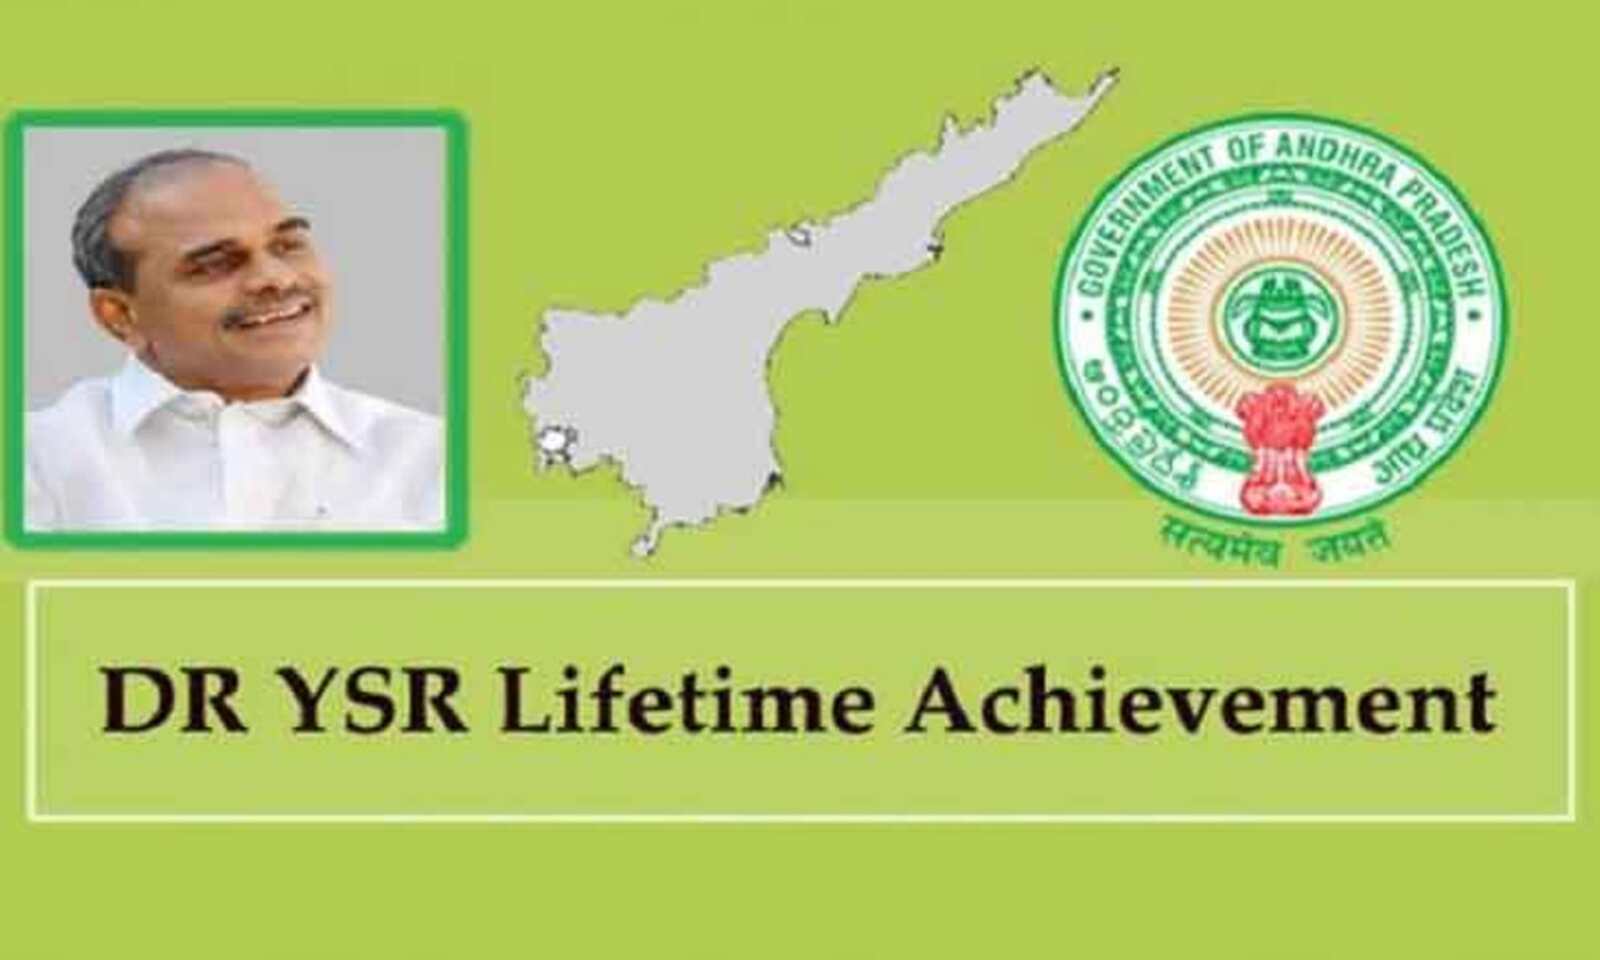 Andhra Pradesh: 12 organisations among 63 YSR award winners